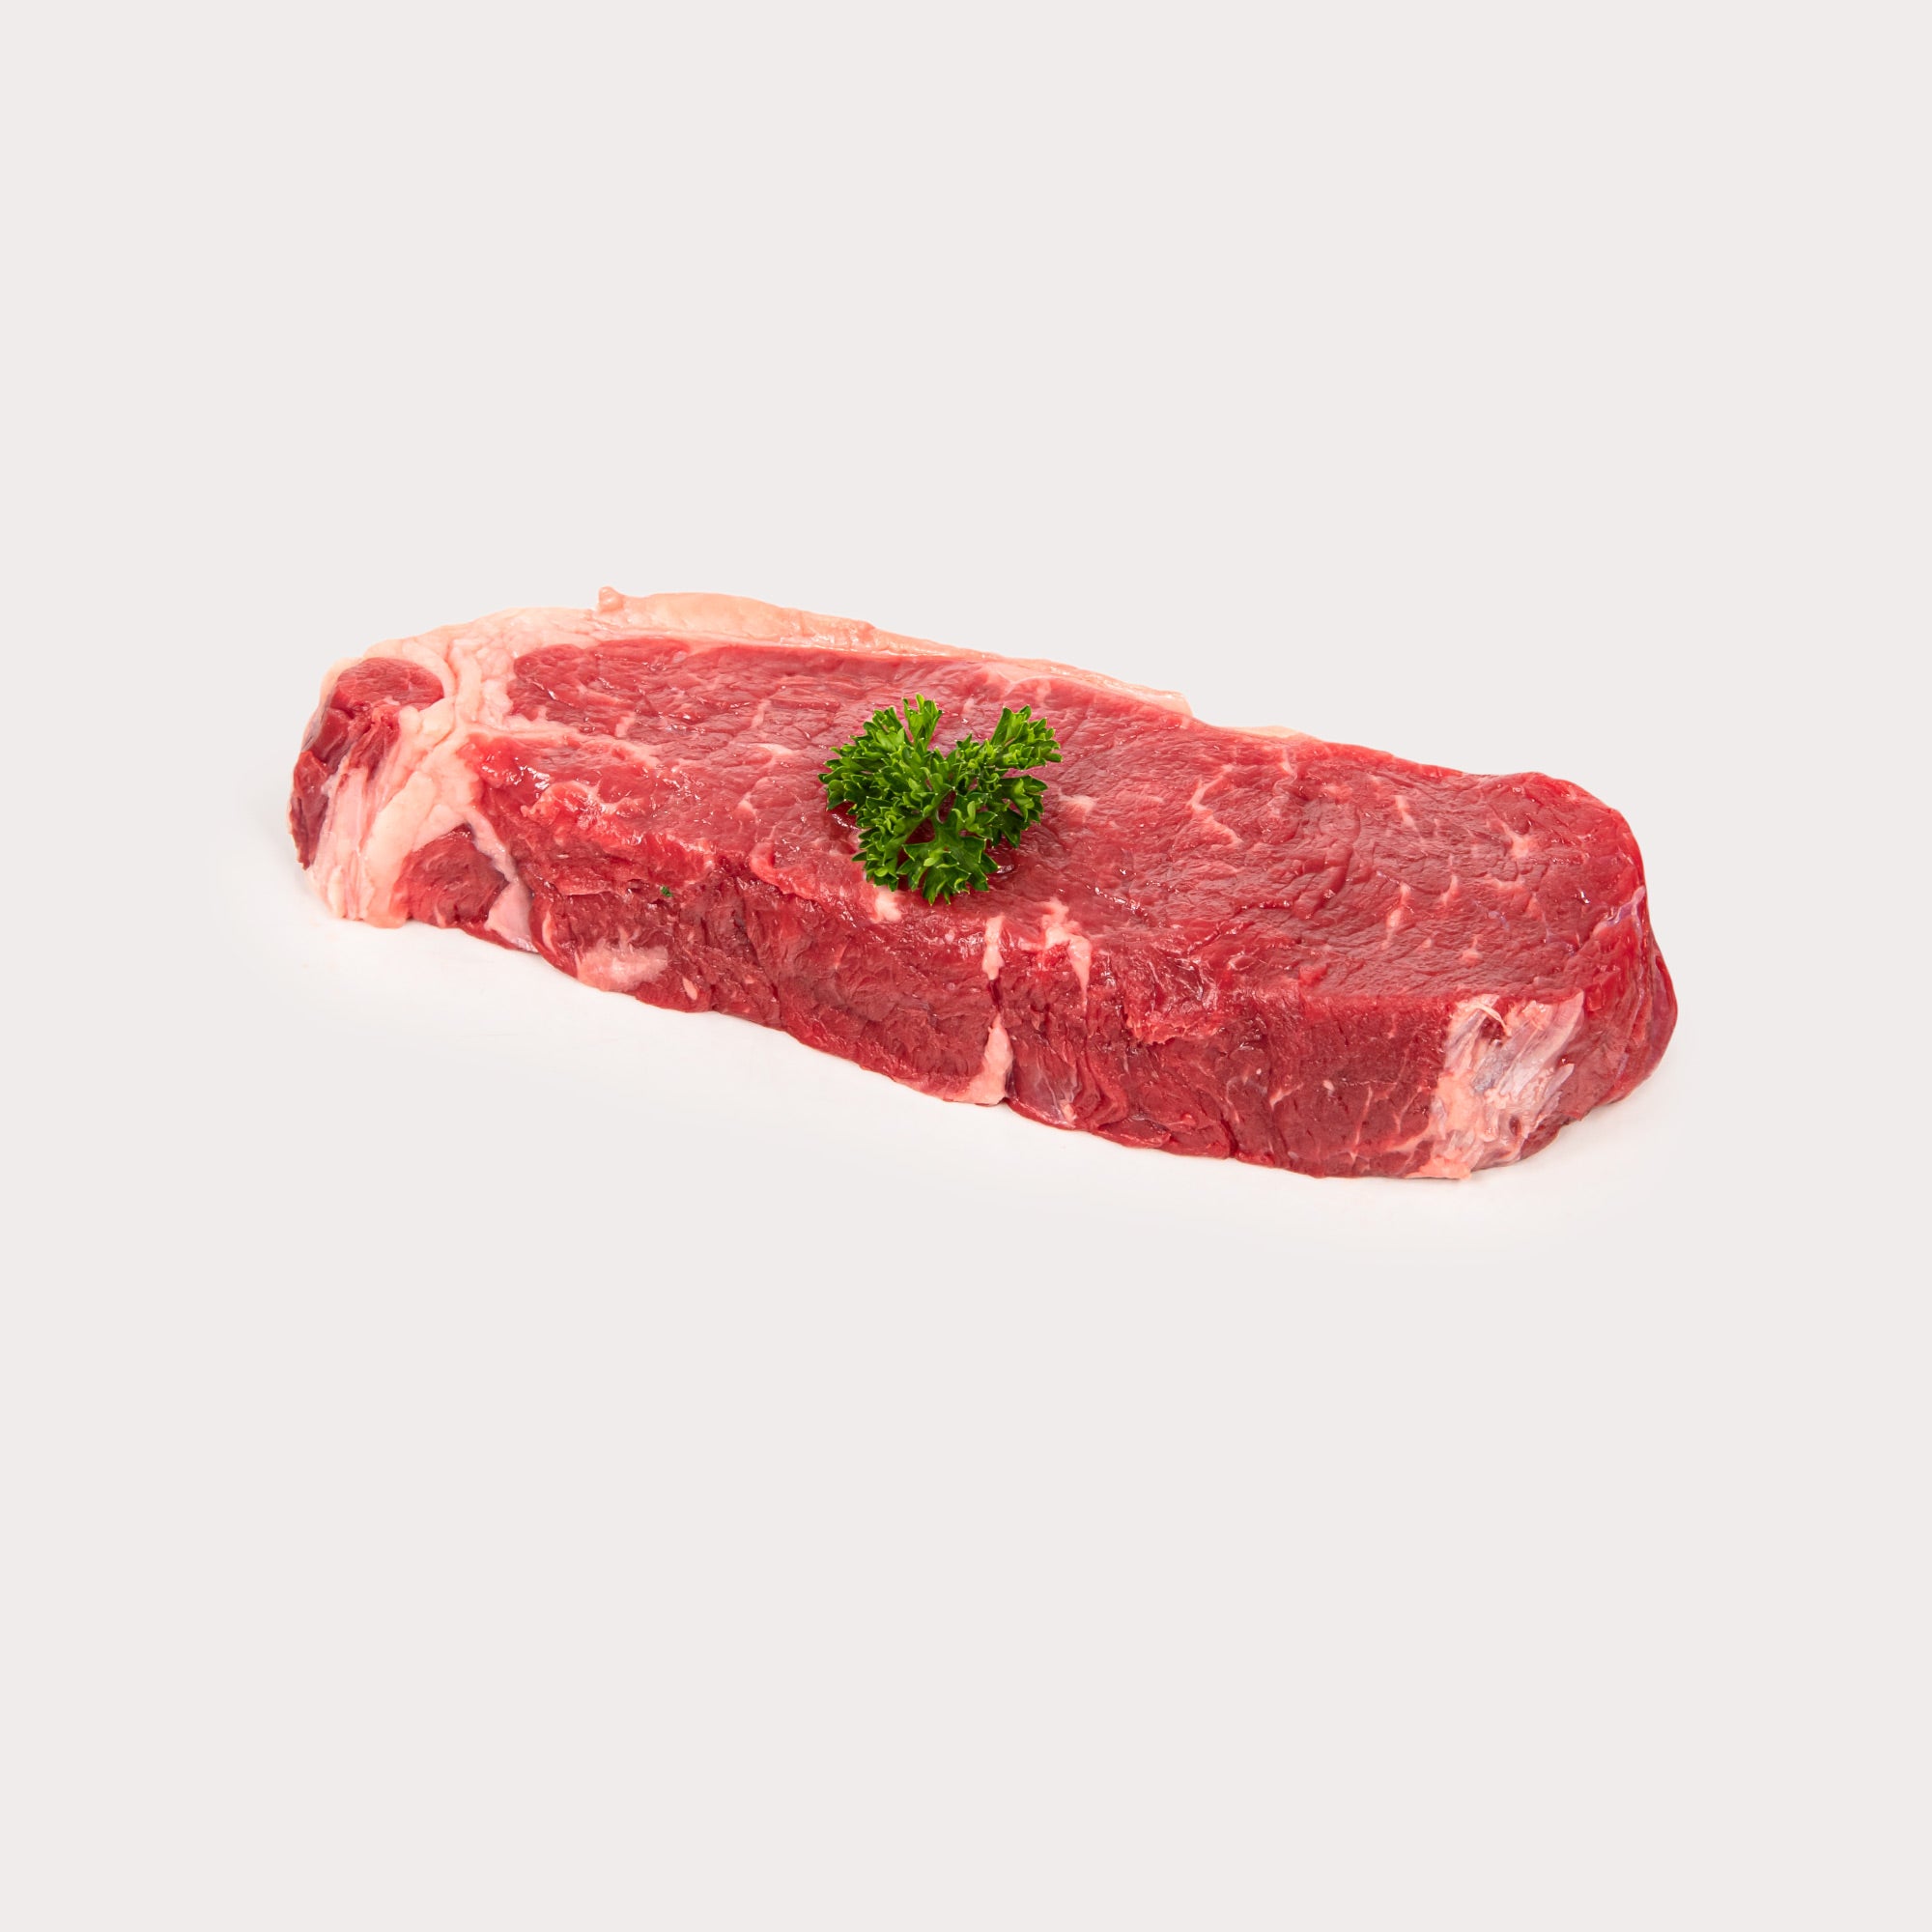 Grass-Fed Free Range New York Steak, 7oz